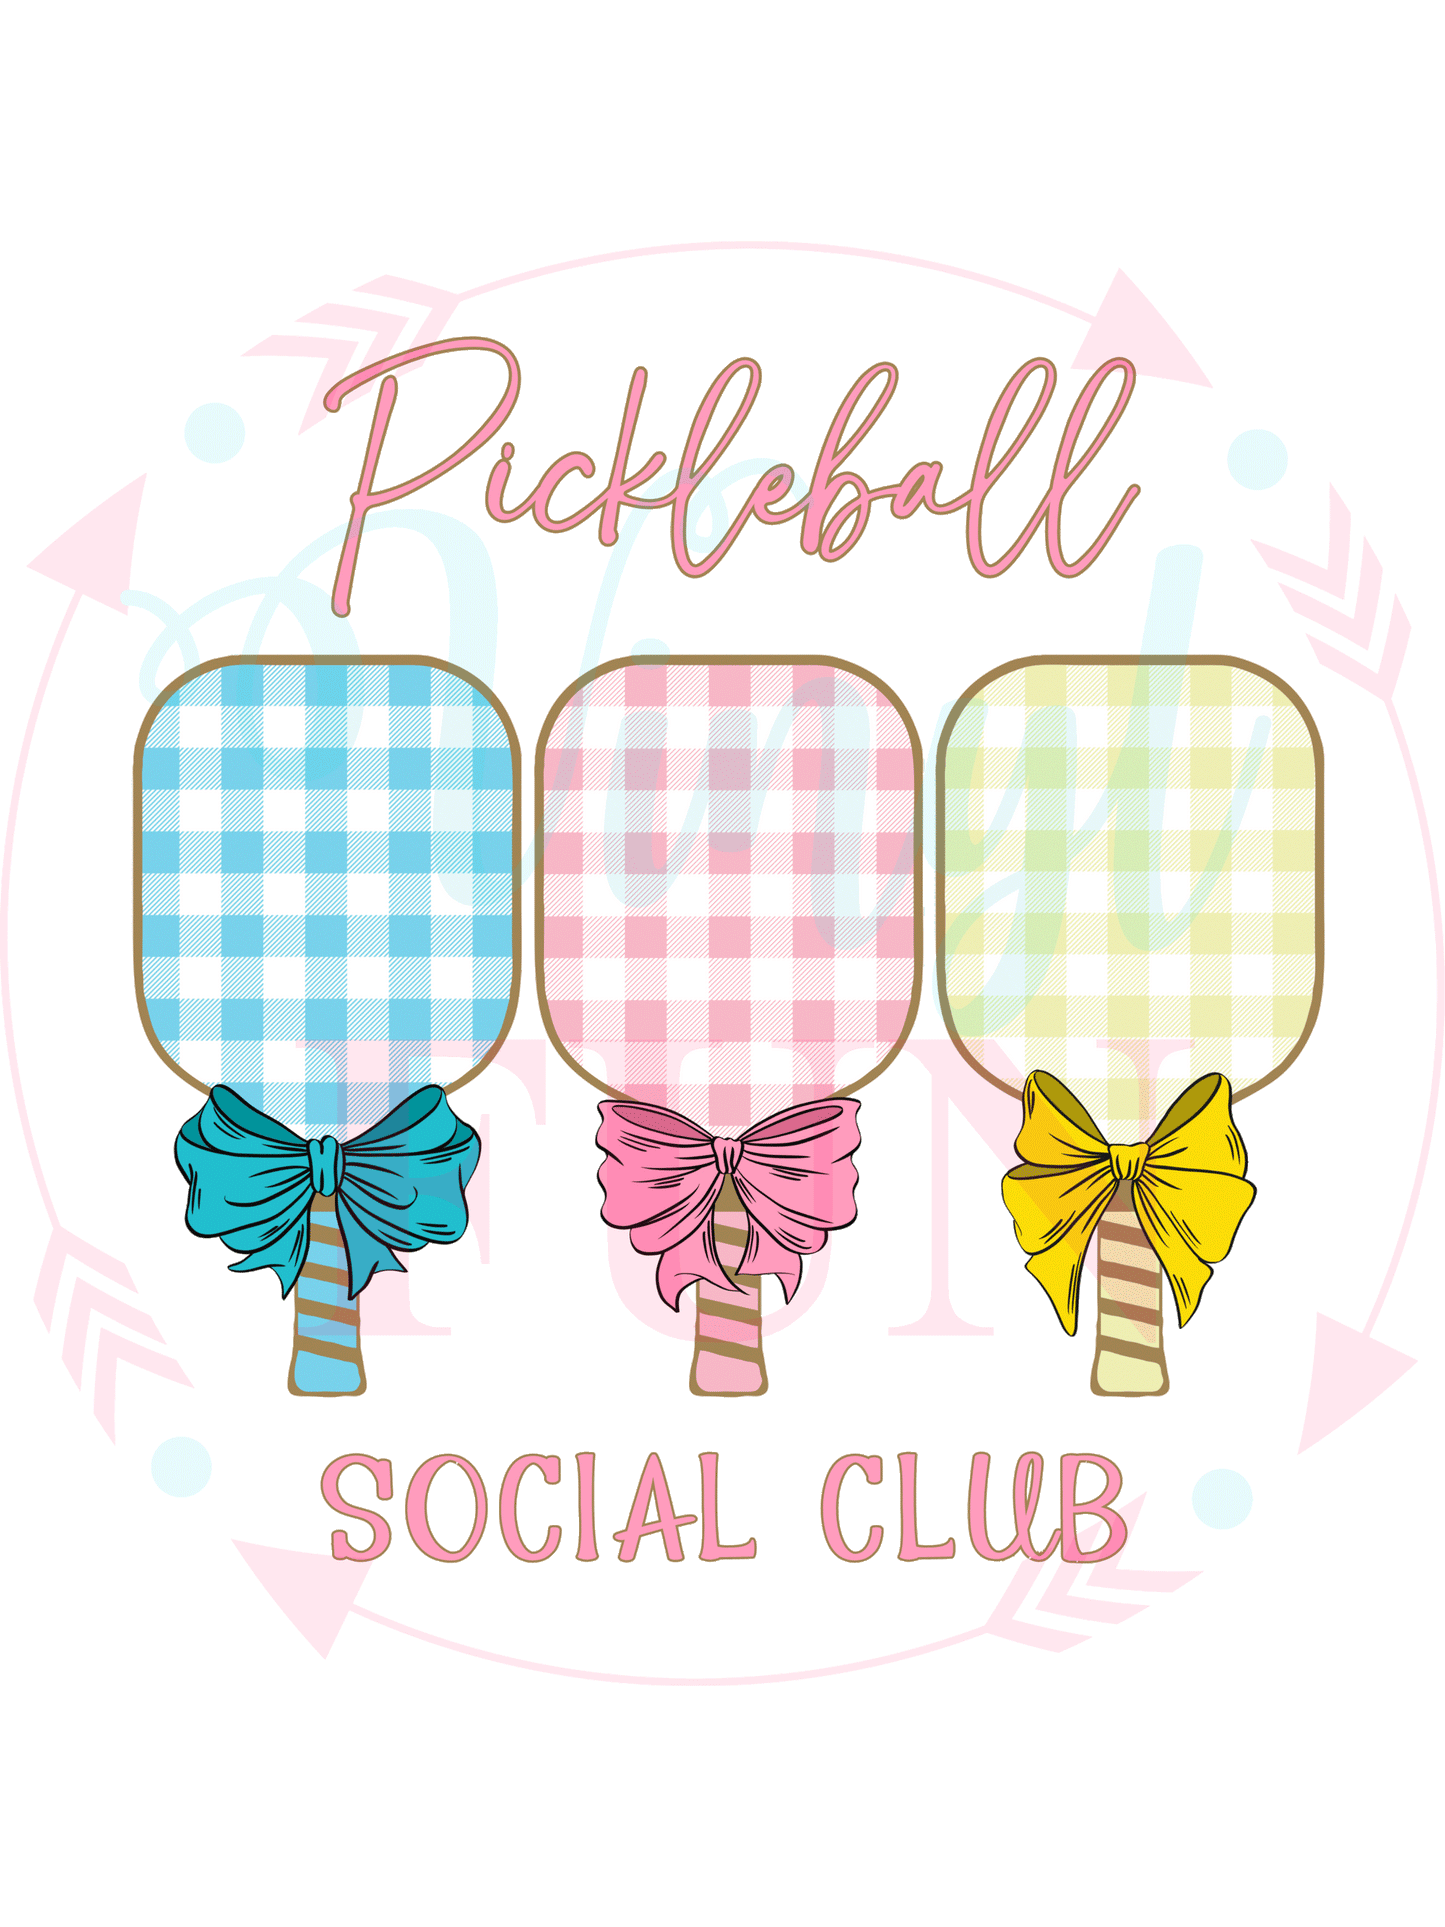 Pickleball Social Club Decal-7